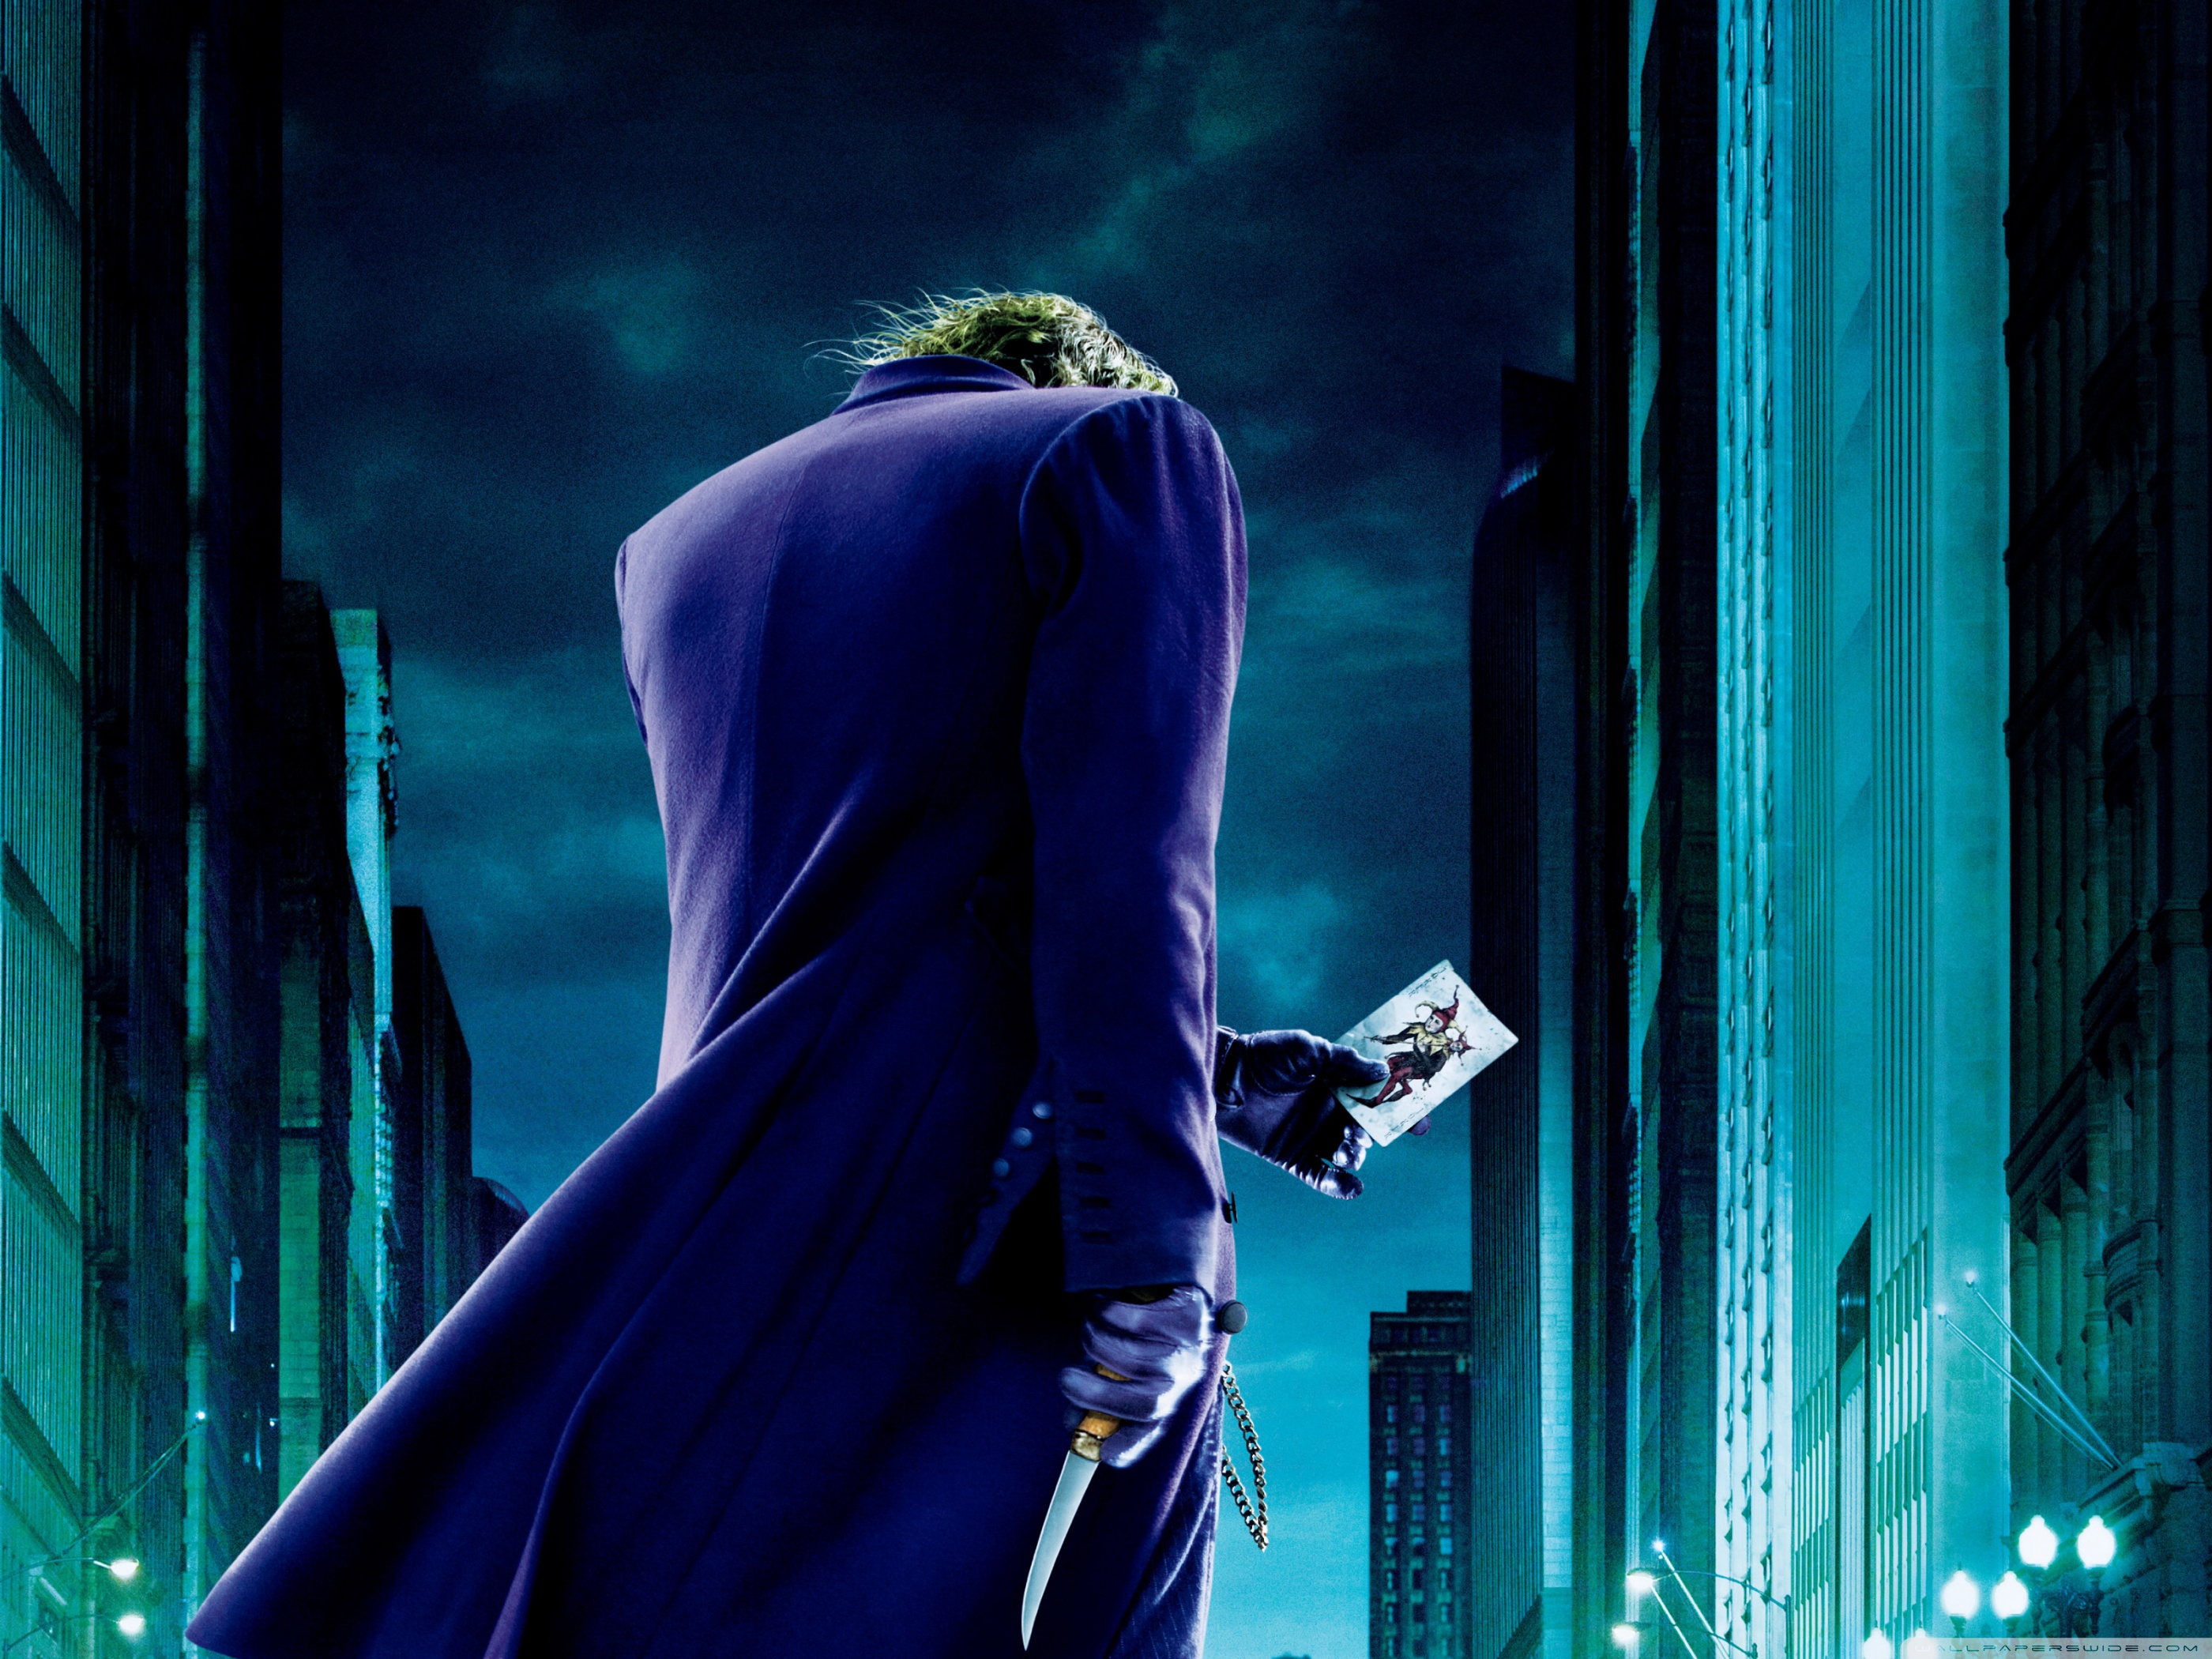 The Joker The Dark Knight Ultra Hd Desktop Background Wallpaper